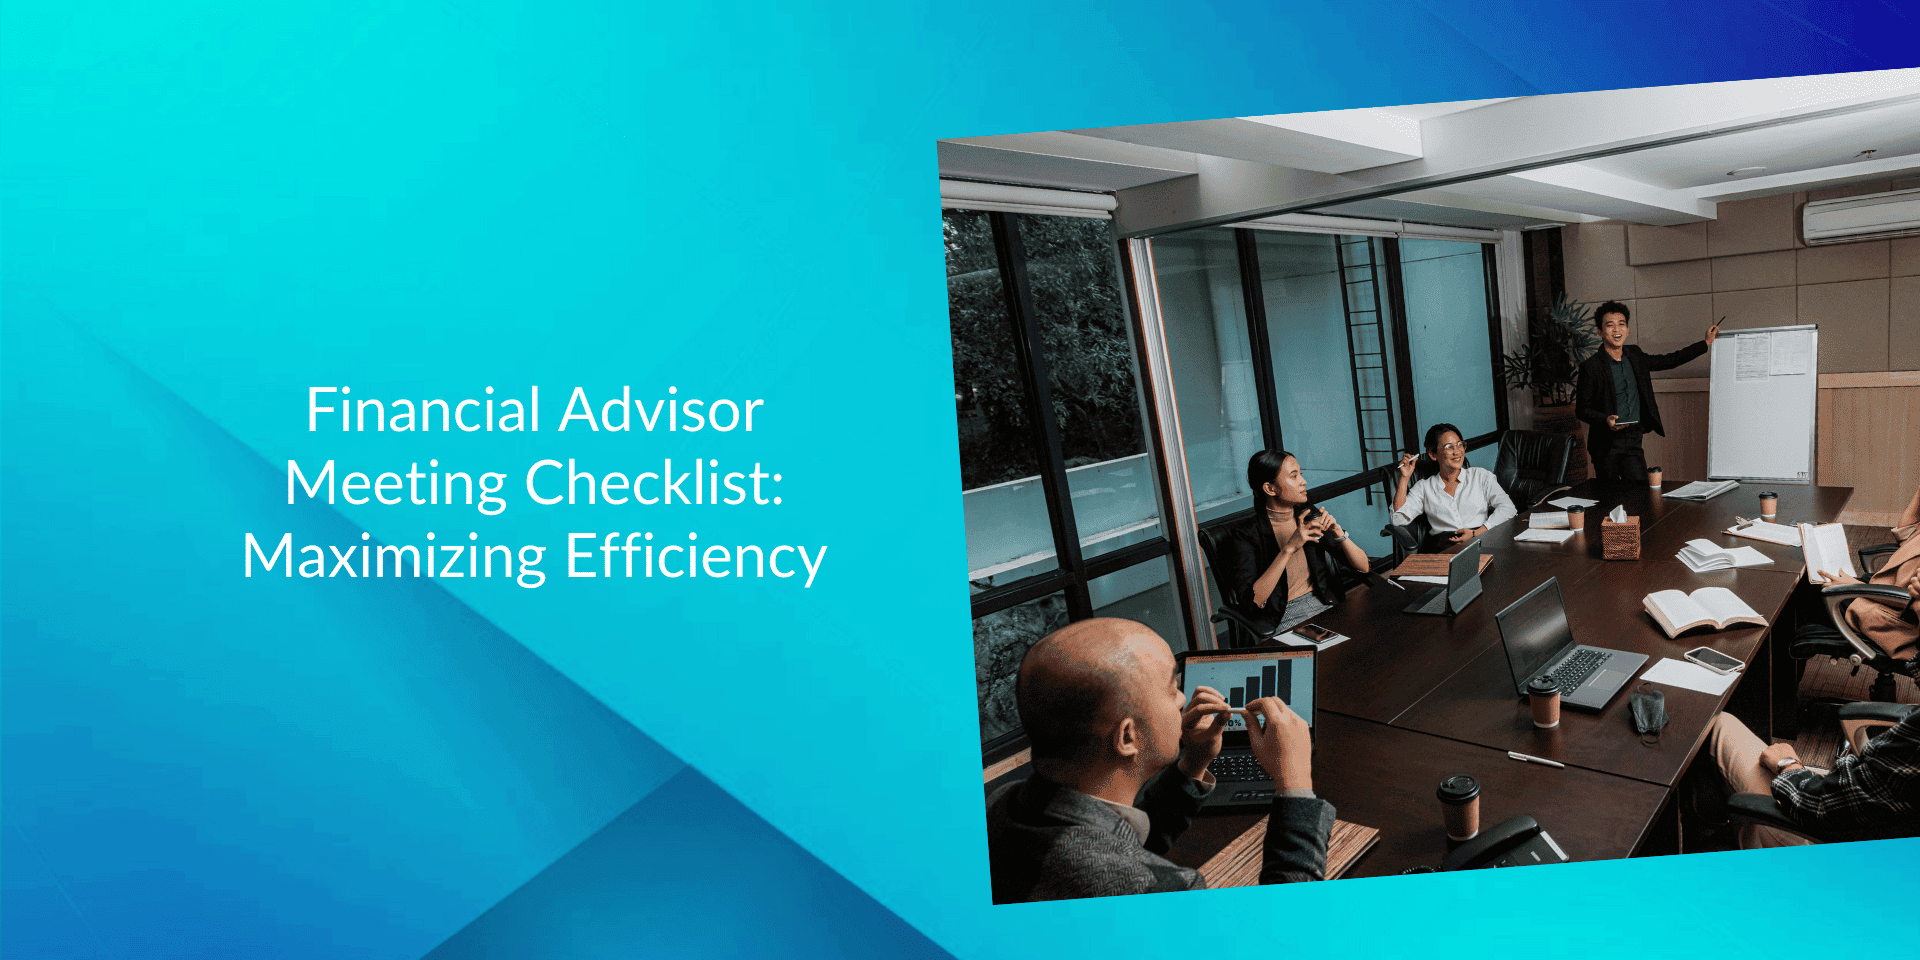 Financial Advisor Meeting Checklist: Maximizing Efficiency